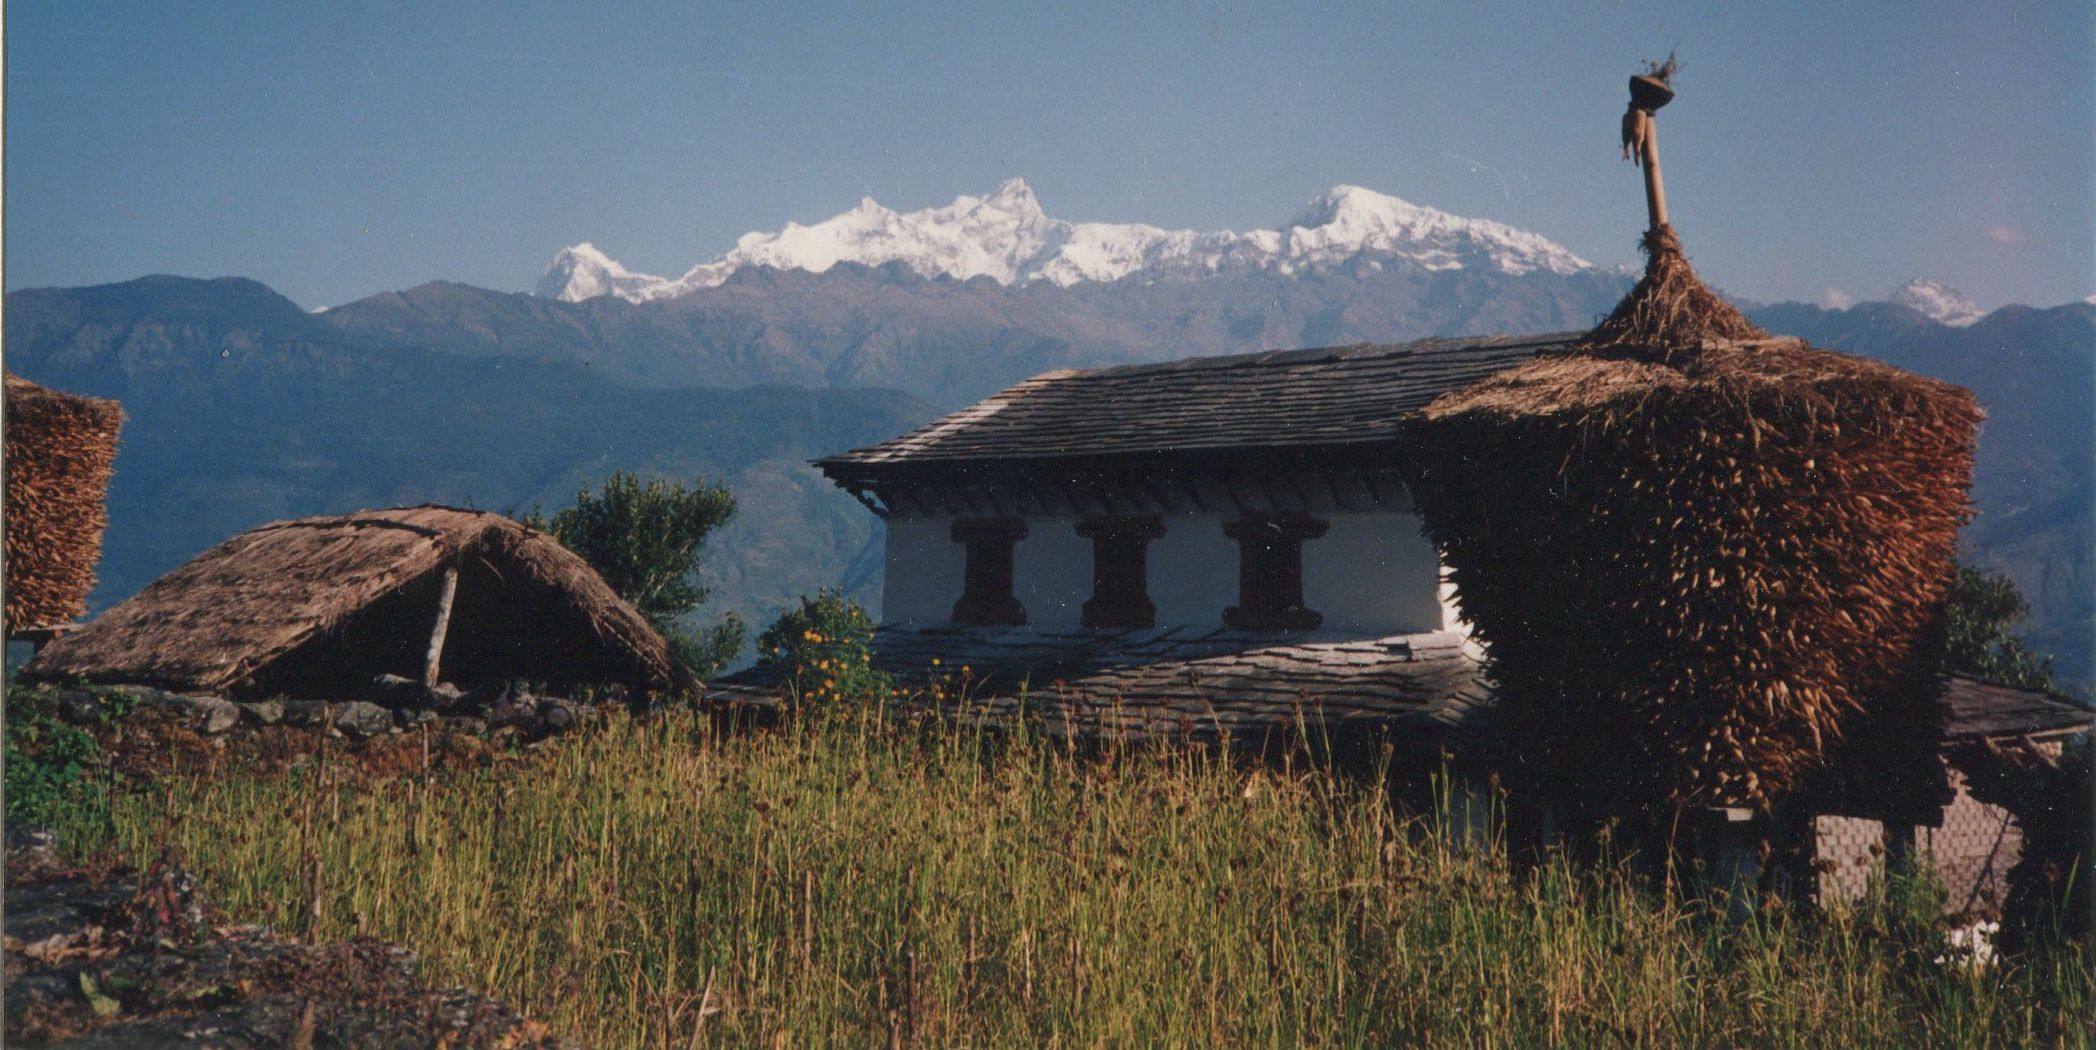 Manaslu Himal from Farmhouse near Gorkha